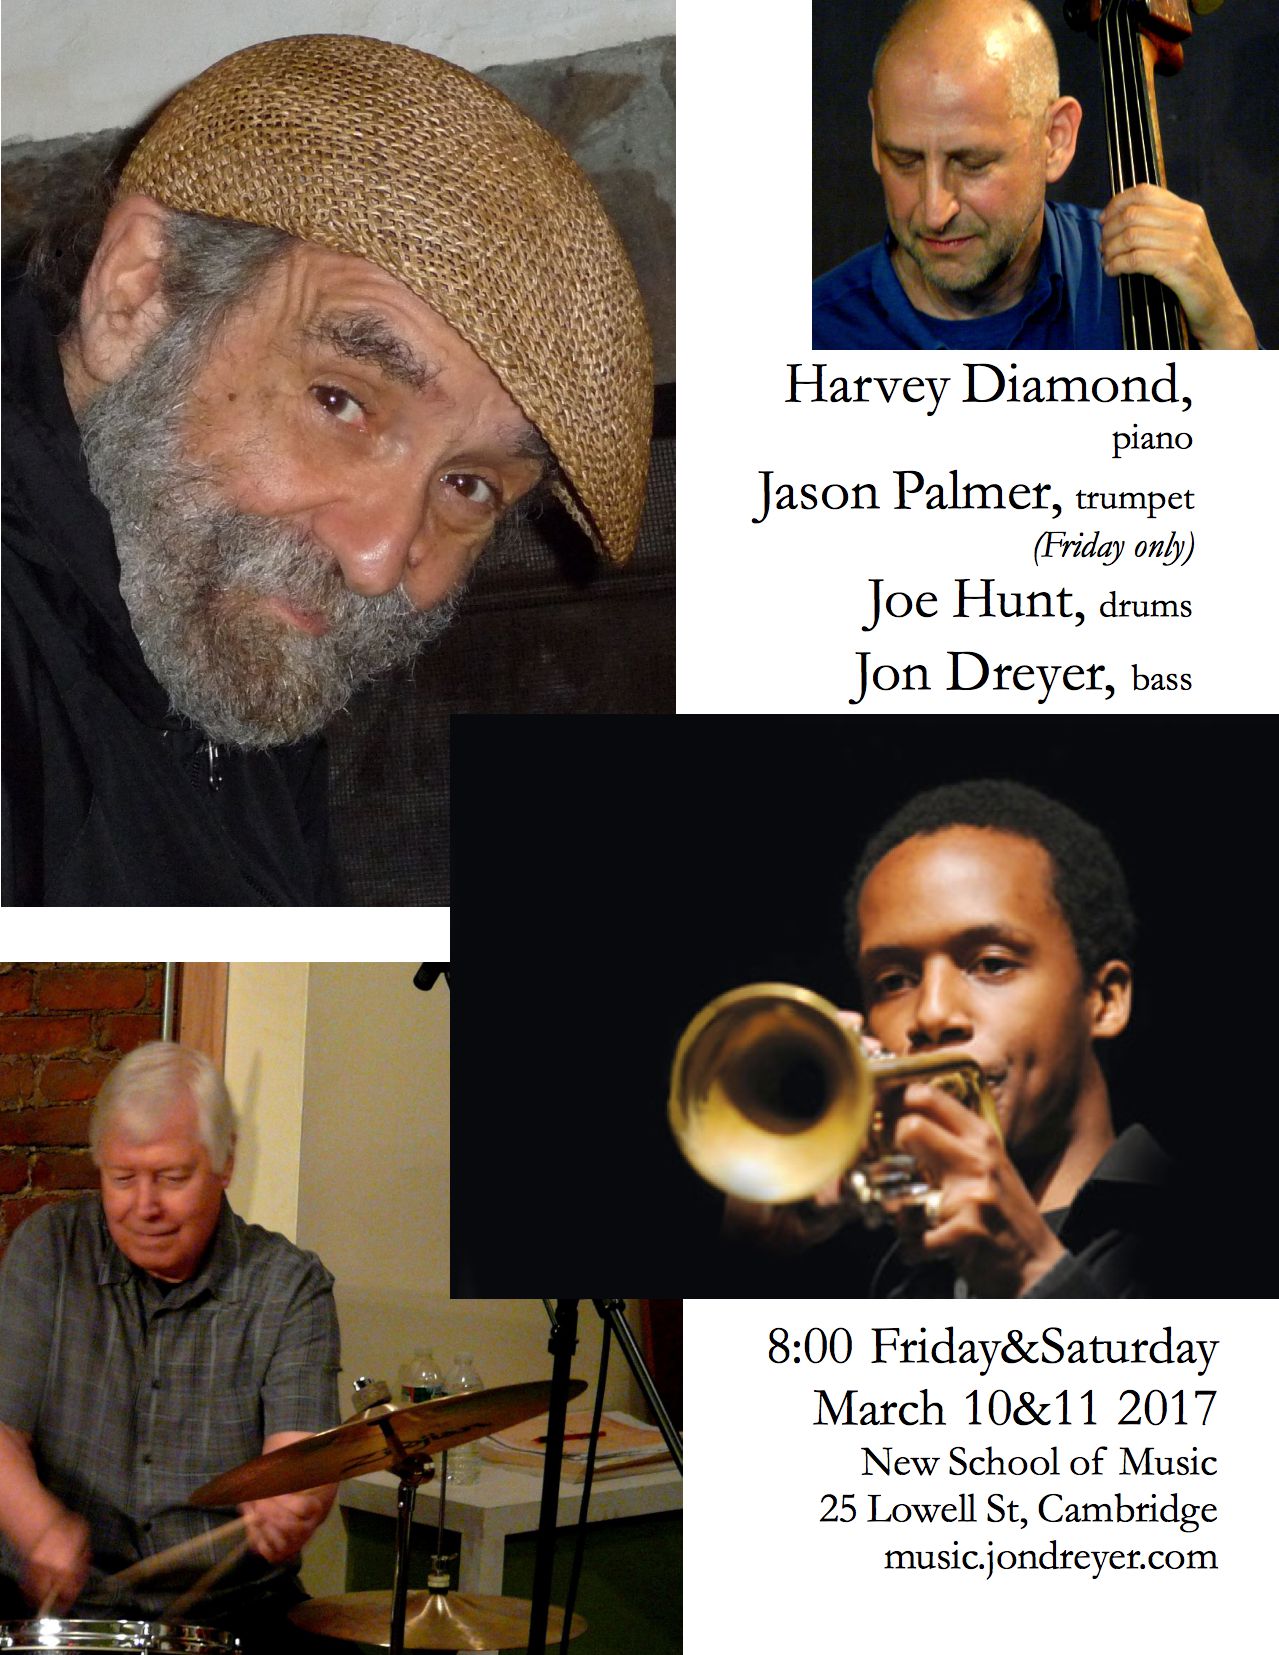 Flyer for March 10/11 2017 Harvey Diamond Trio/Quartet